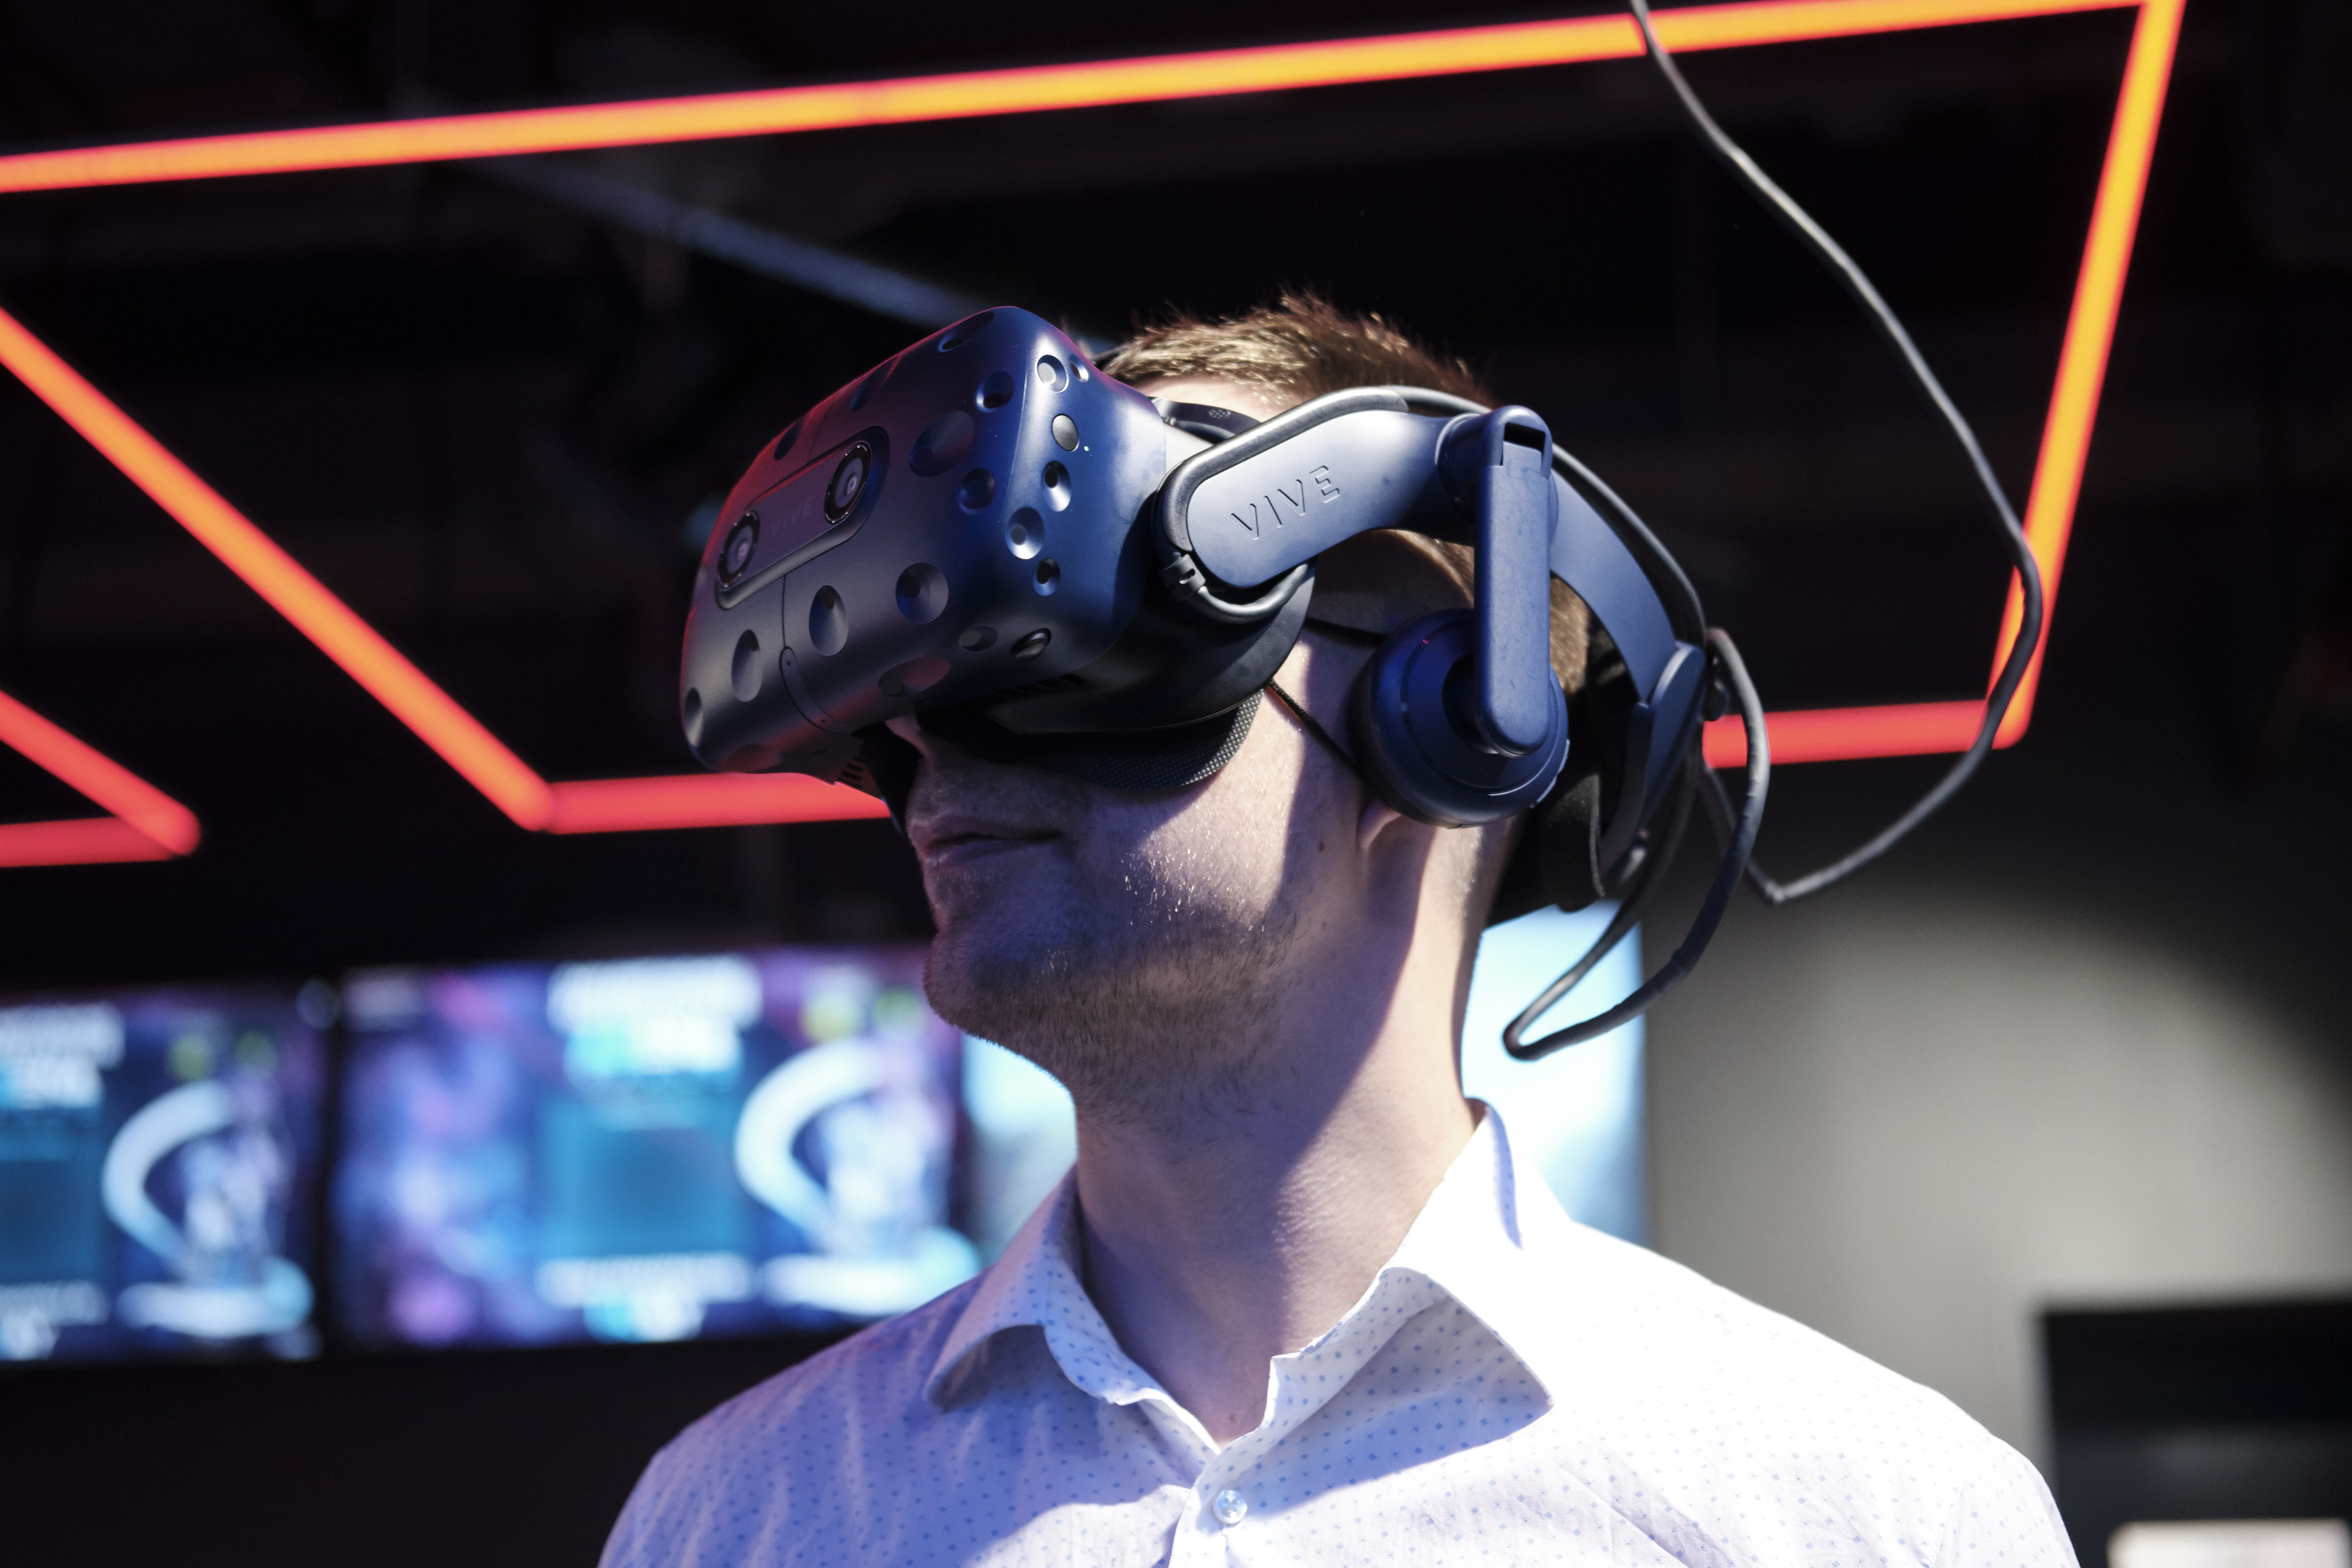 Vr город. VR парк. Slide VR Арена Спейс. VR В парке. Первый VR парк командных игр в Саратове.